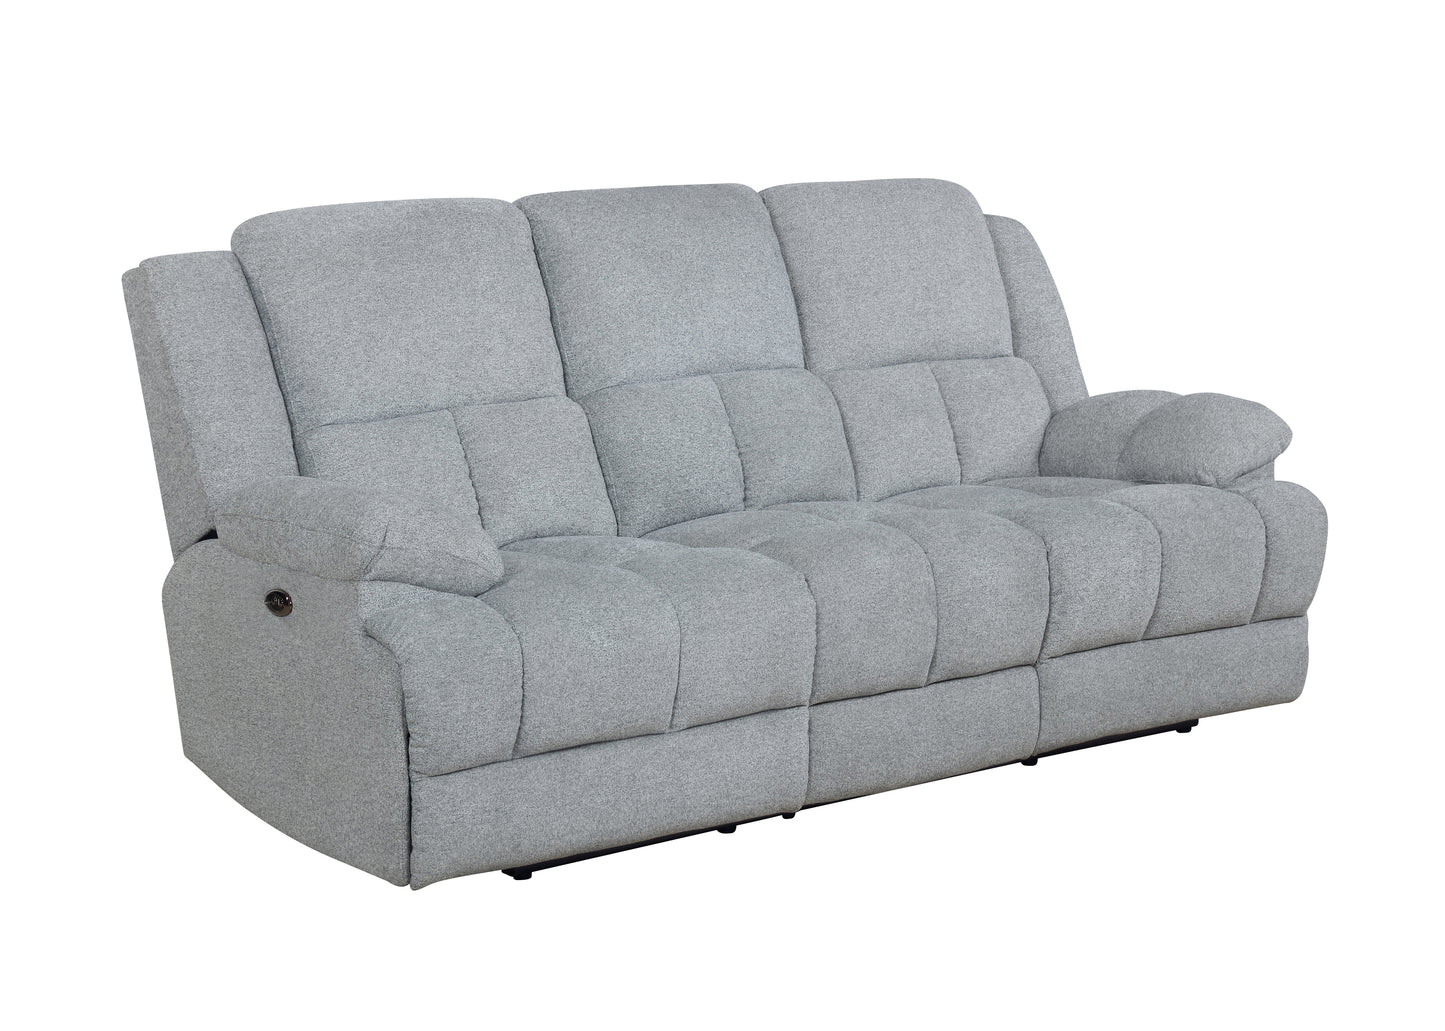 Waterbury 3-piece Pillow Top Arm Motion Living Room Set Grey